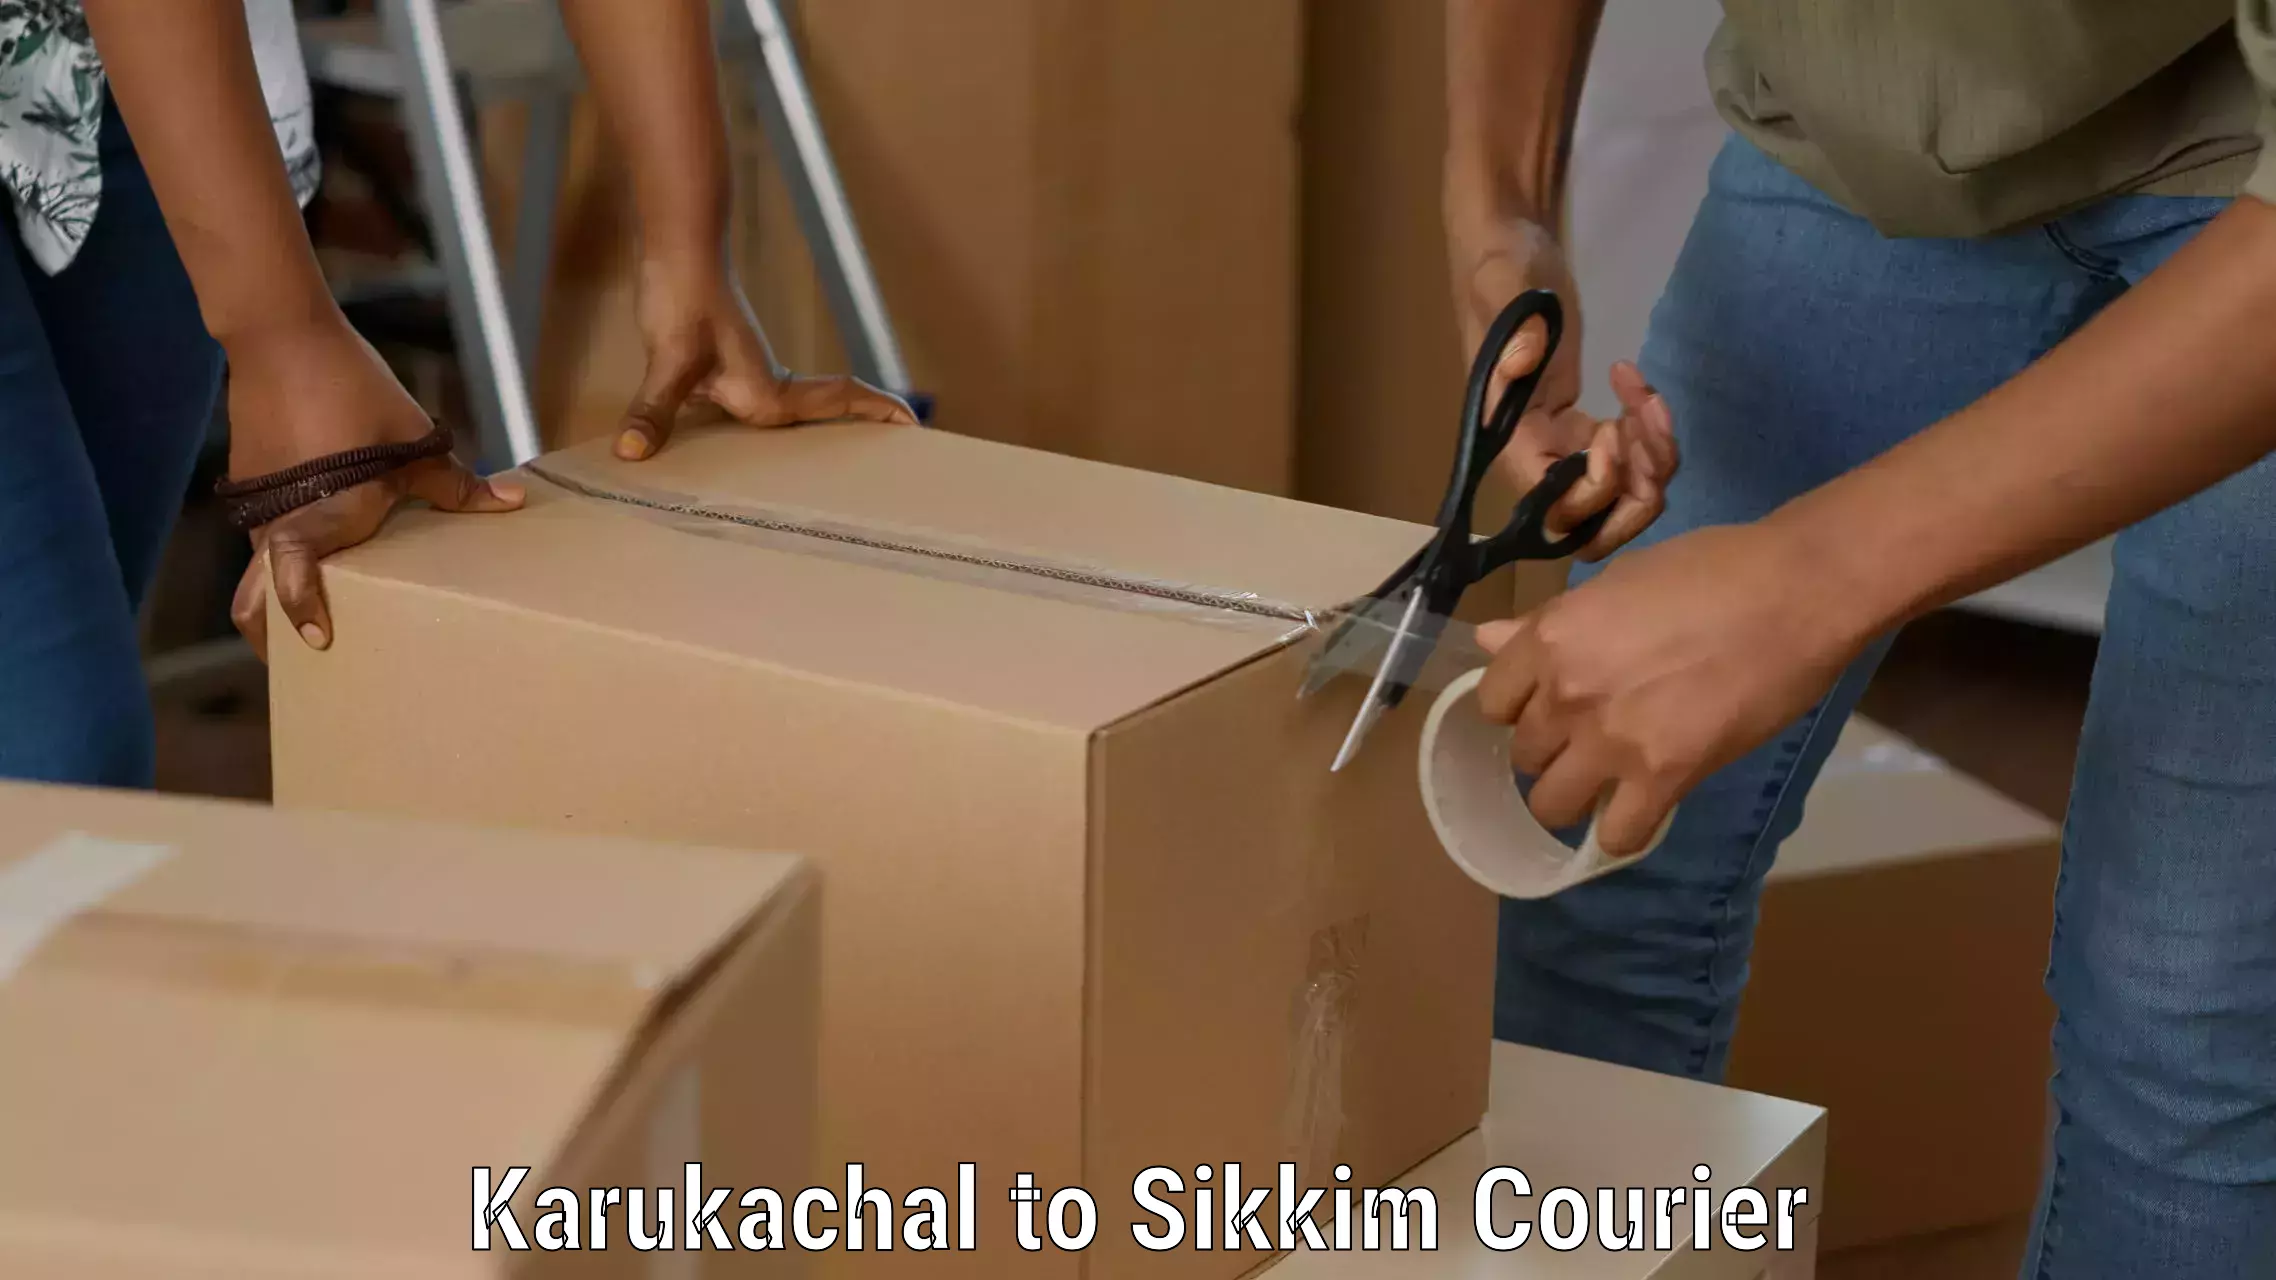 Efficient logistics management Karukachal to Pelling